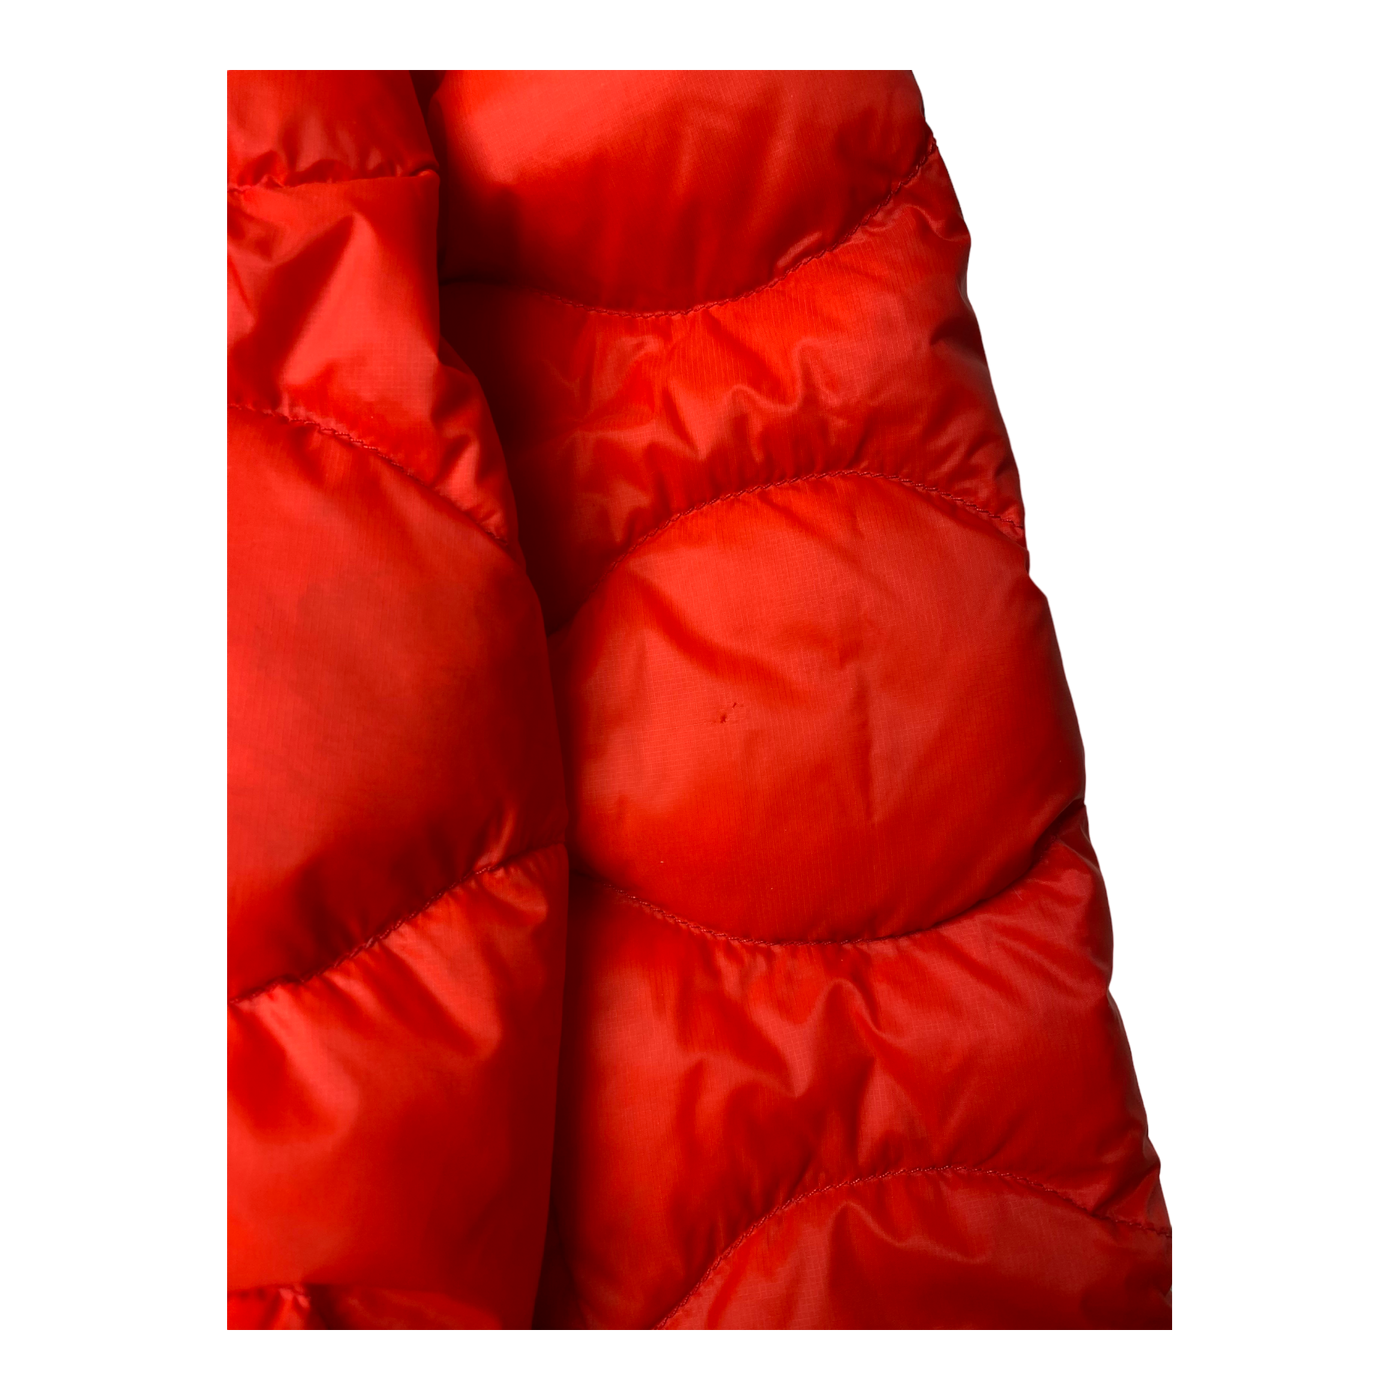 Peak Performance light down jacket, red | 130cm